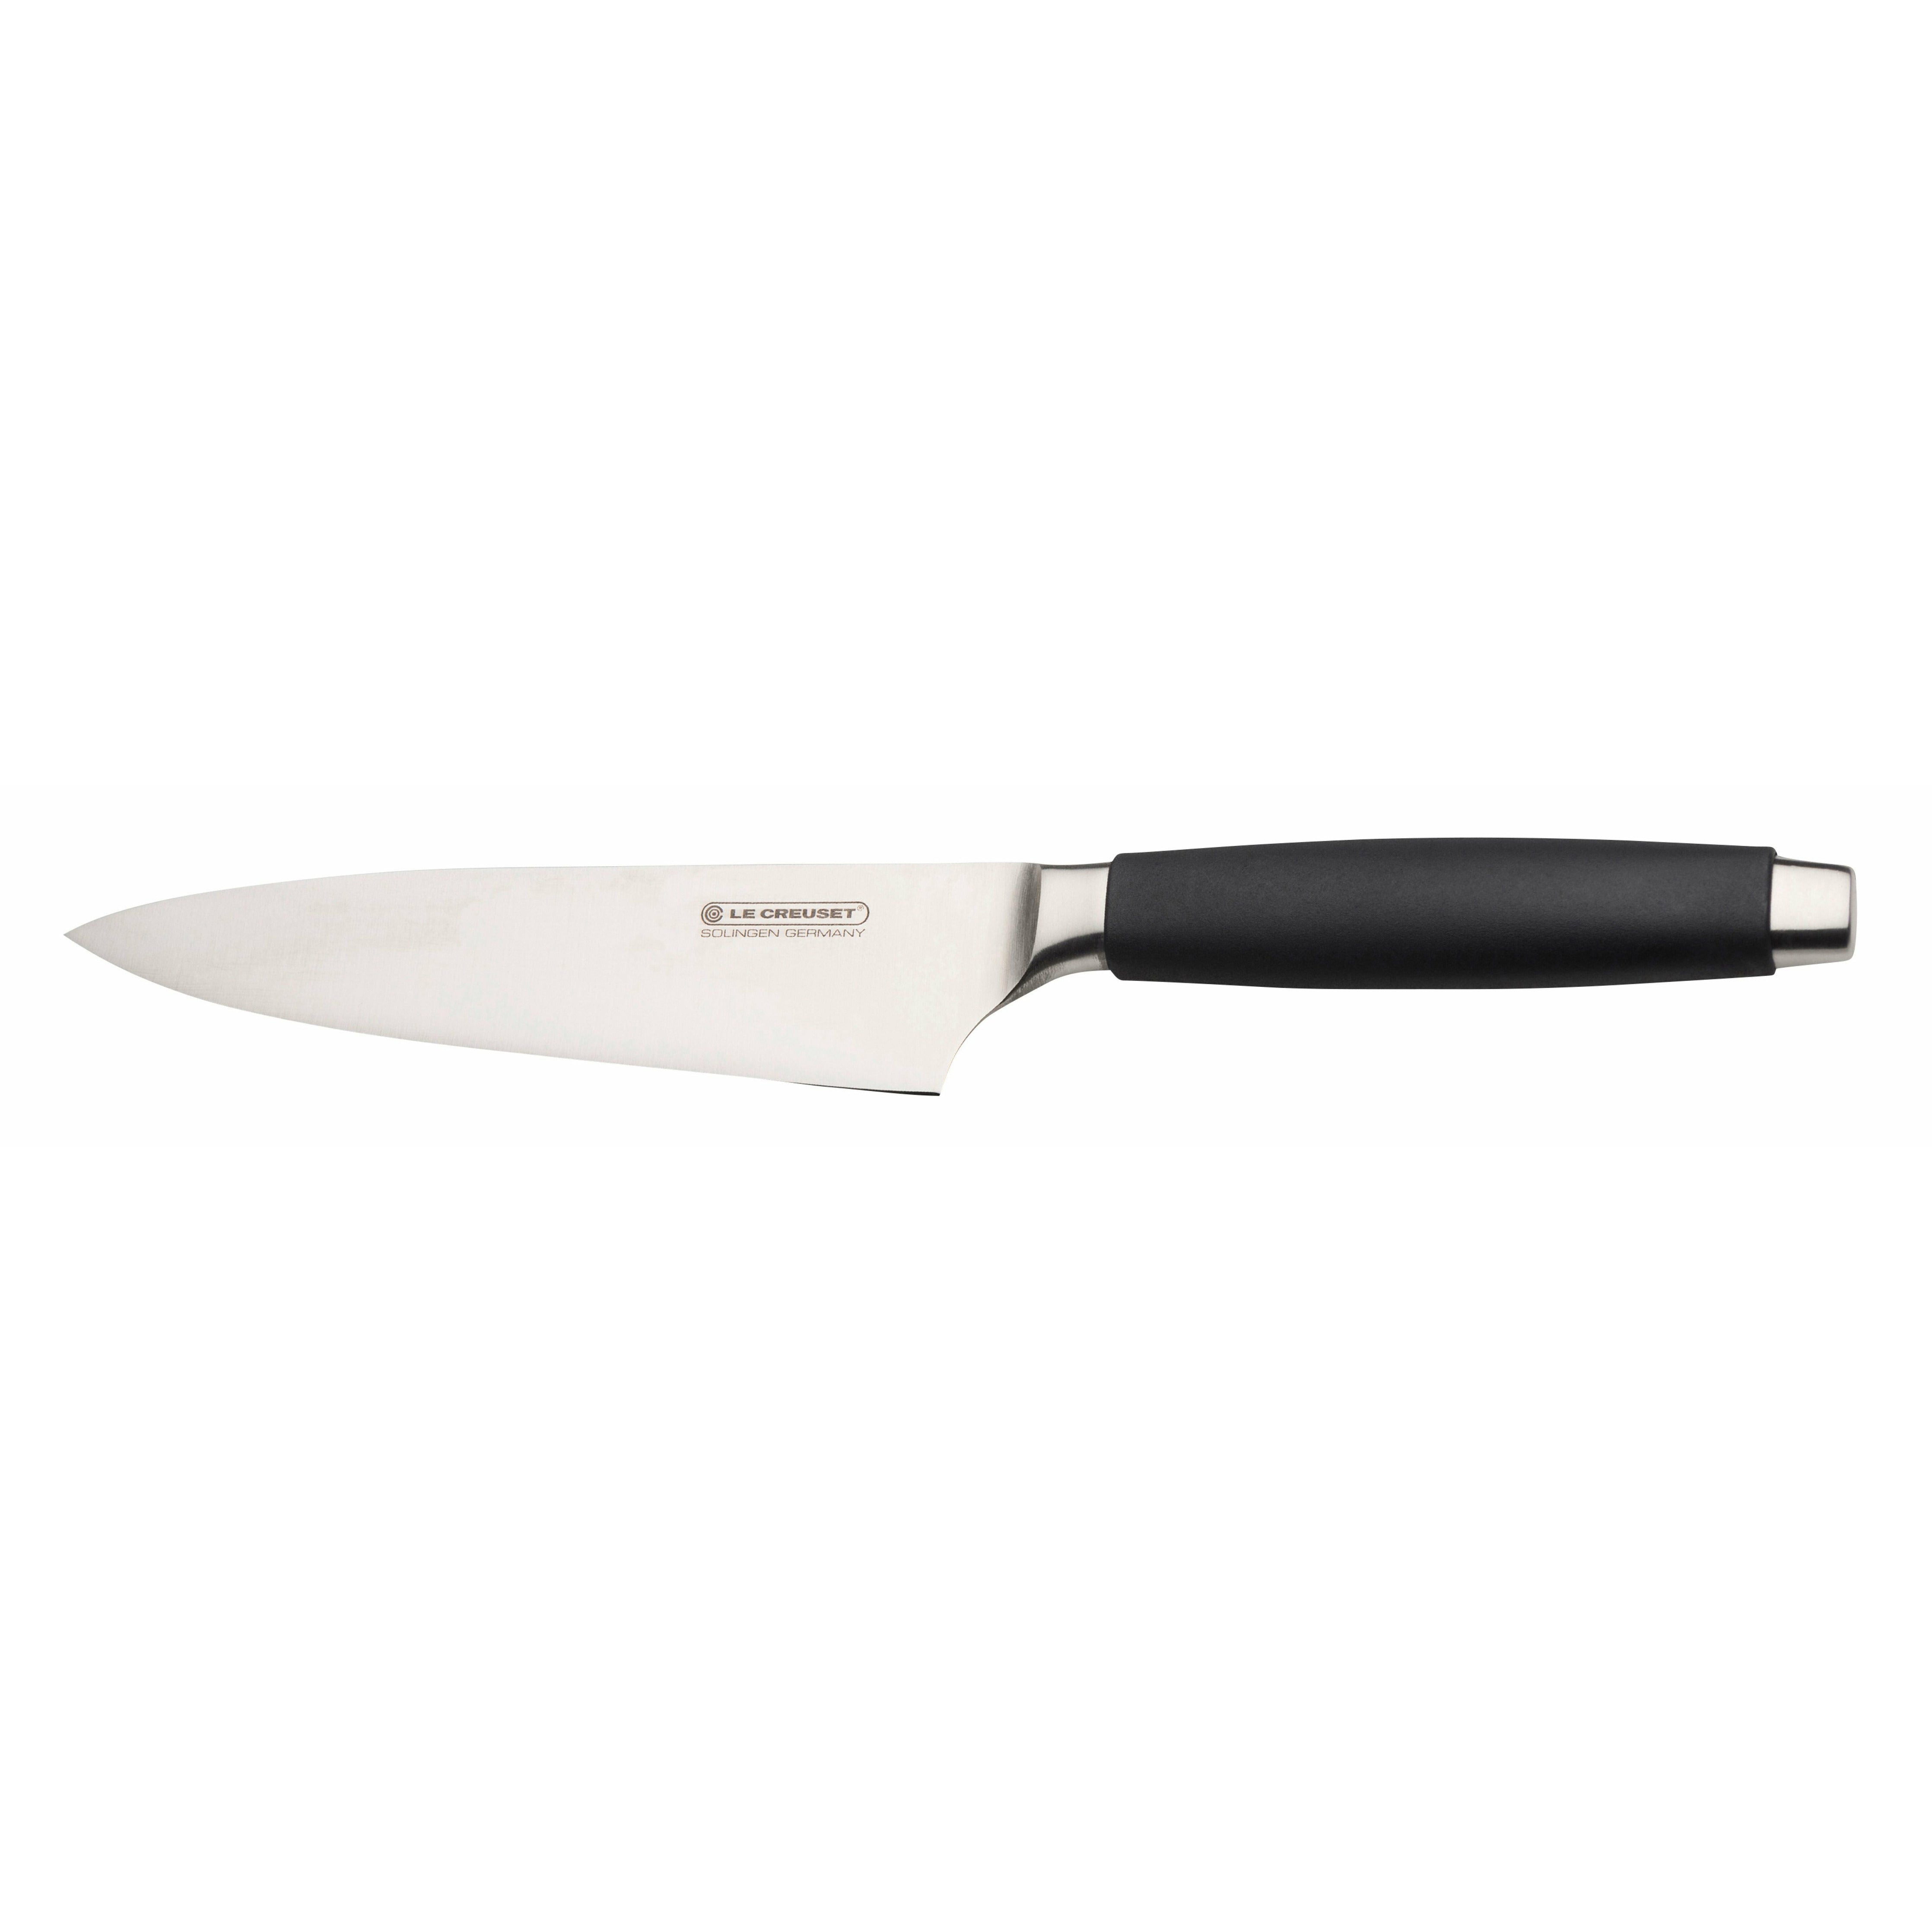 Le Creuset Chef's Messer Standard mit schwarzem Griff, 15 cm